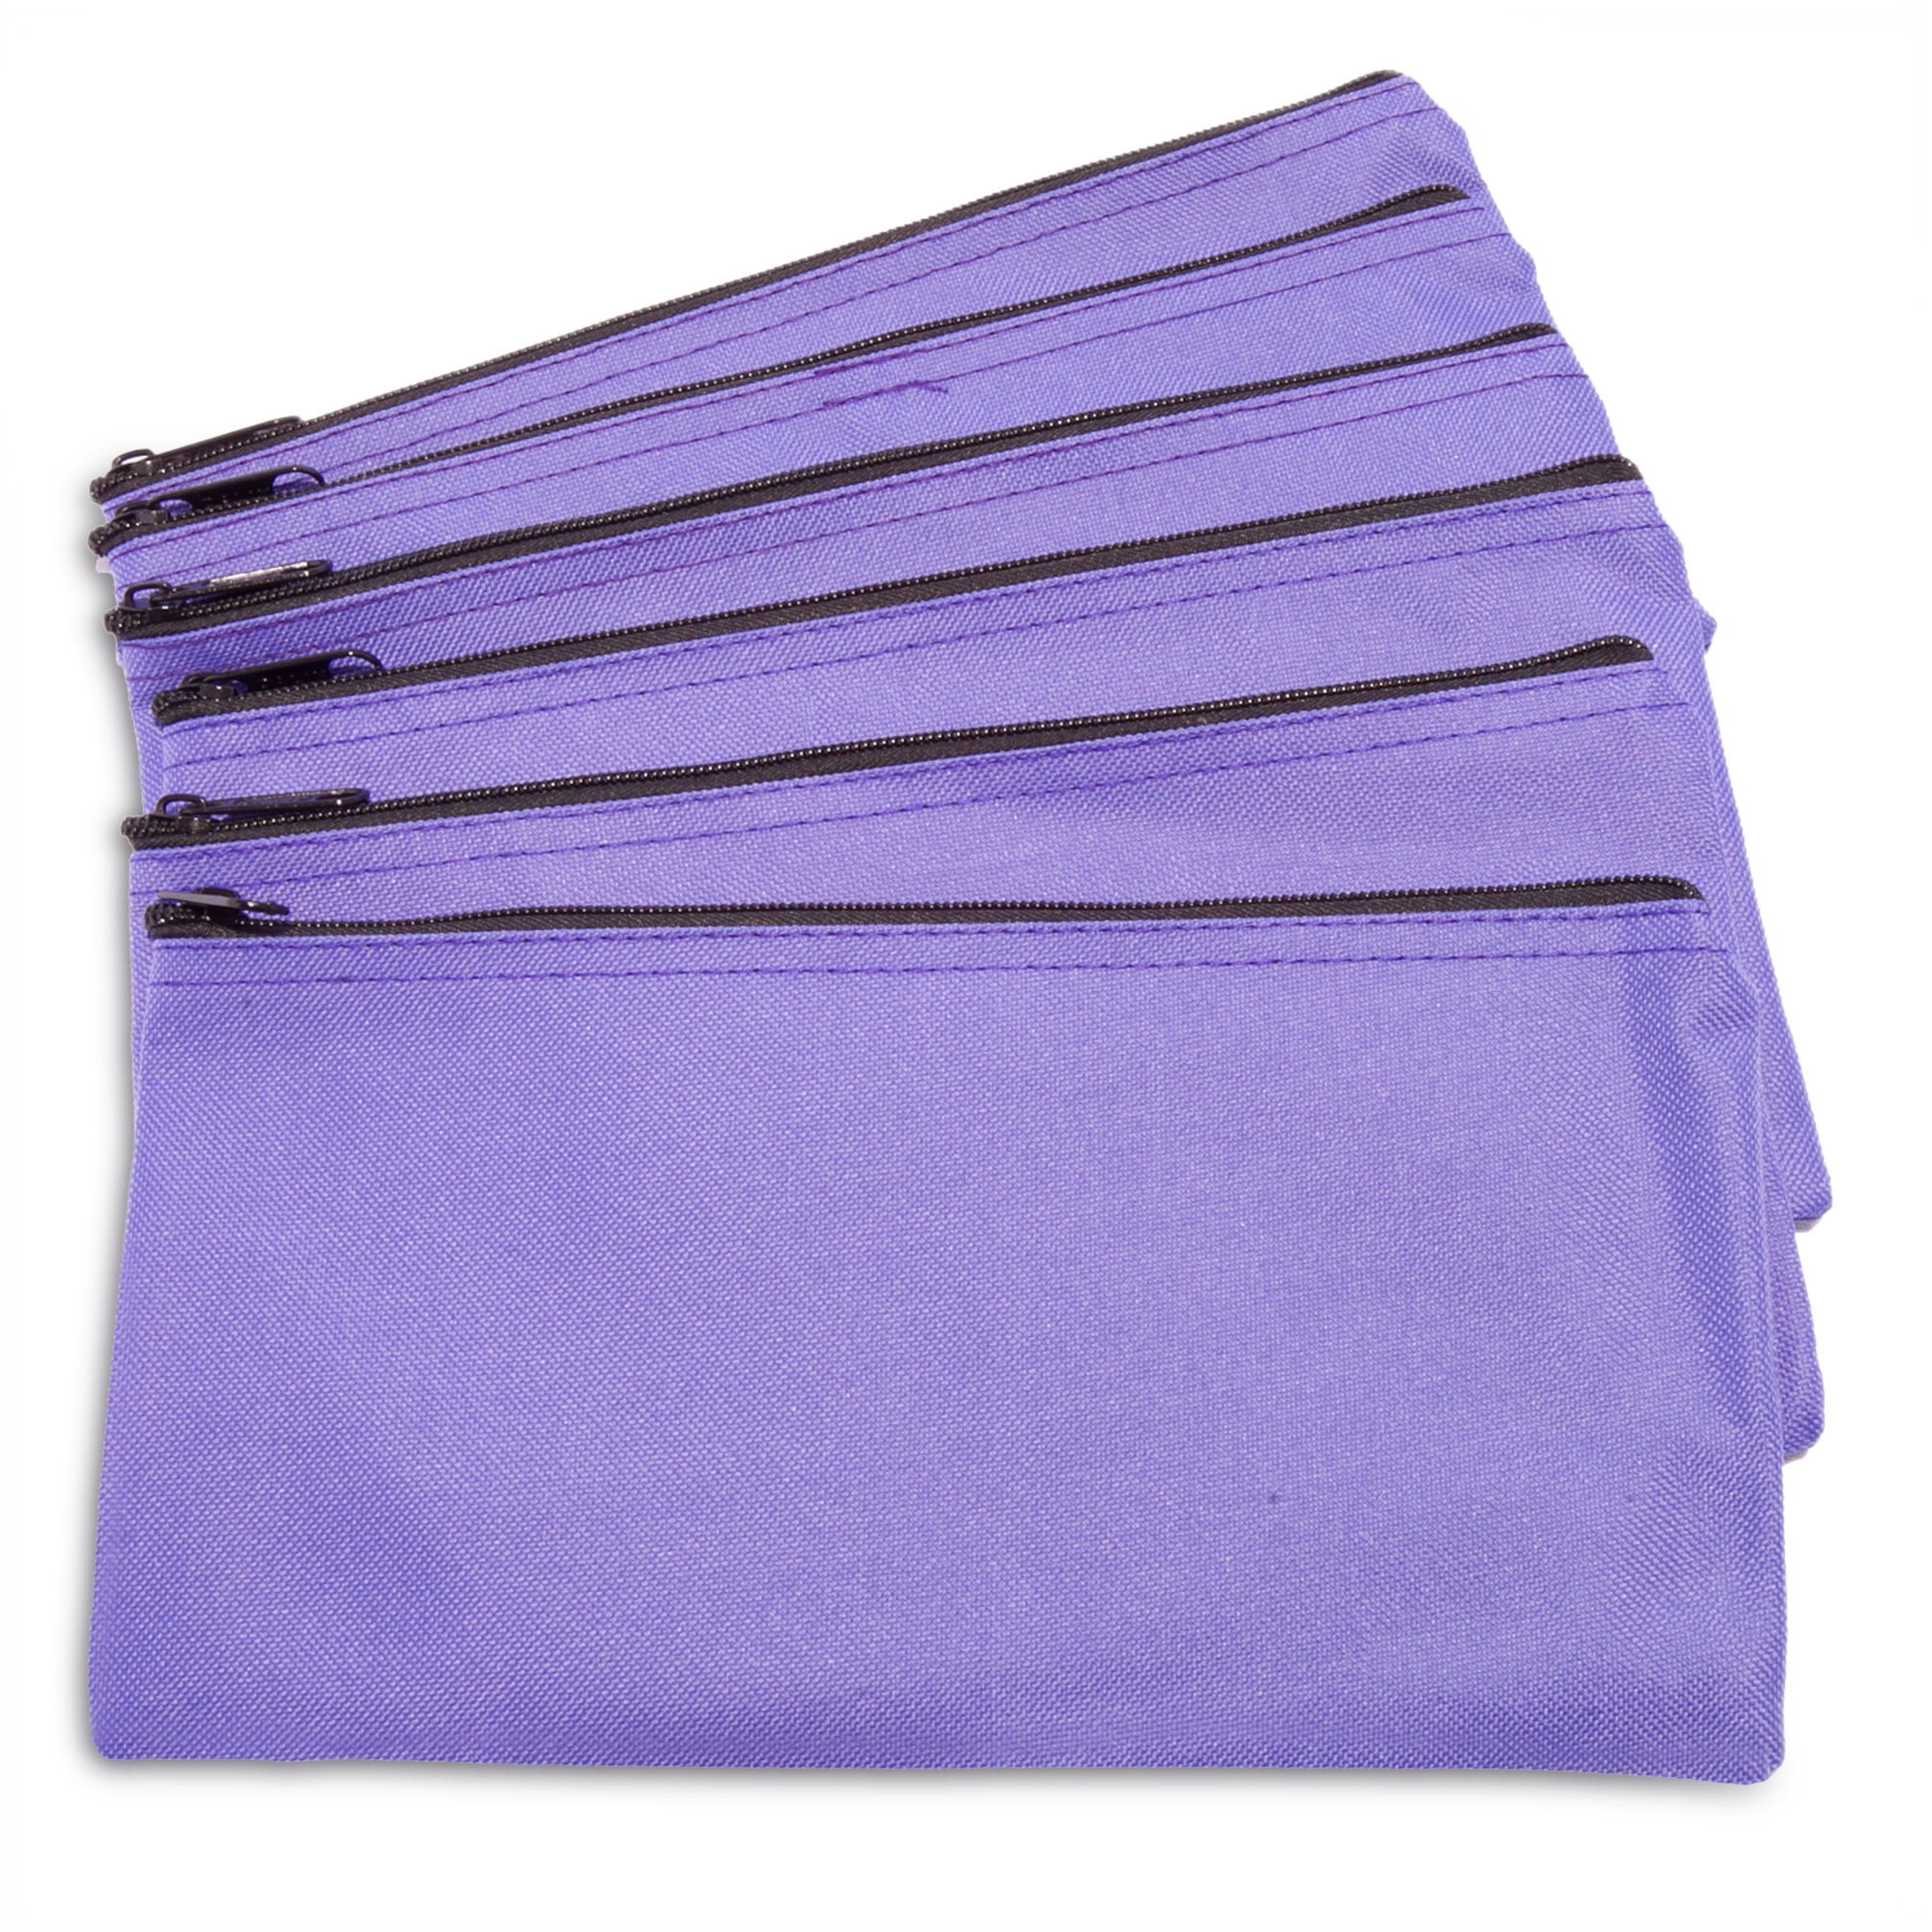 DALIX Zipper Bank Deposit Money Bags Cash Coin Pouch 6 PACK in Purple - 0